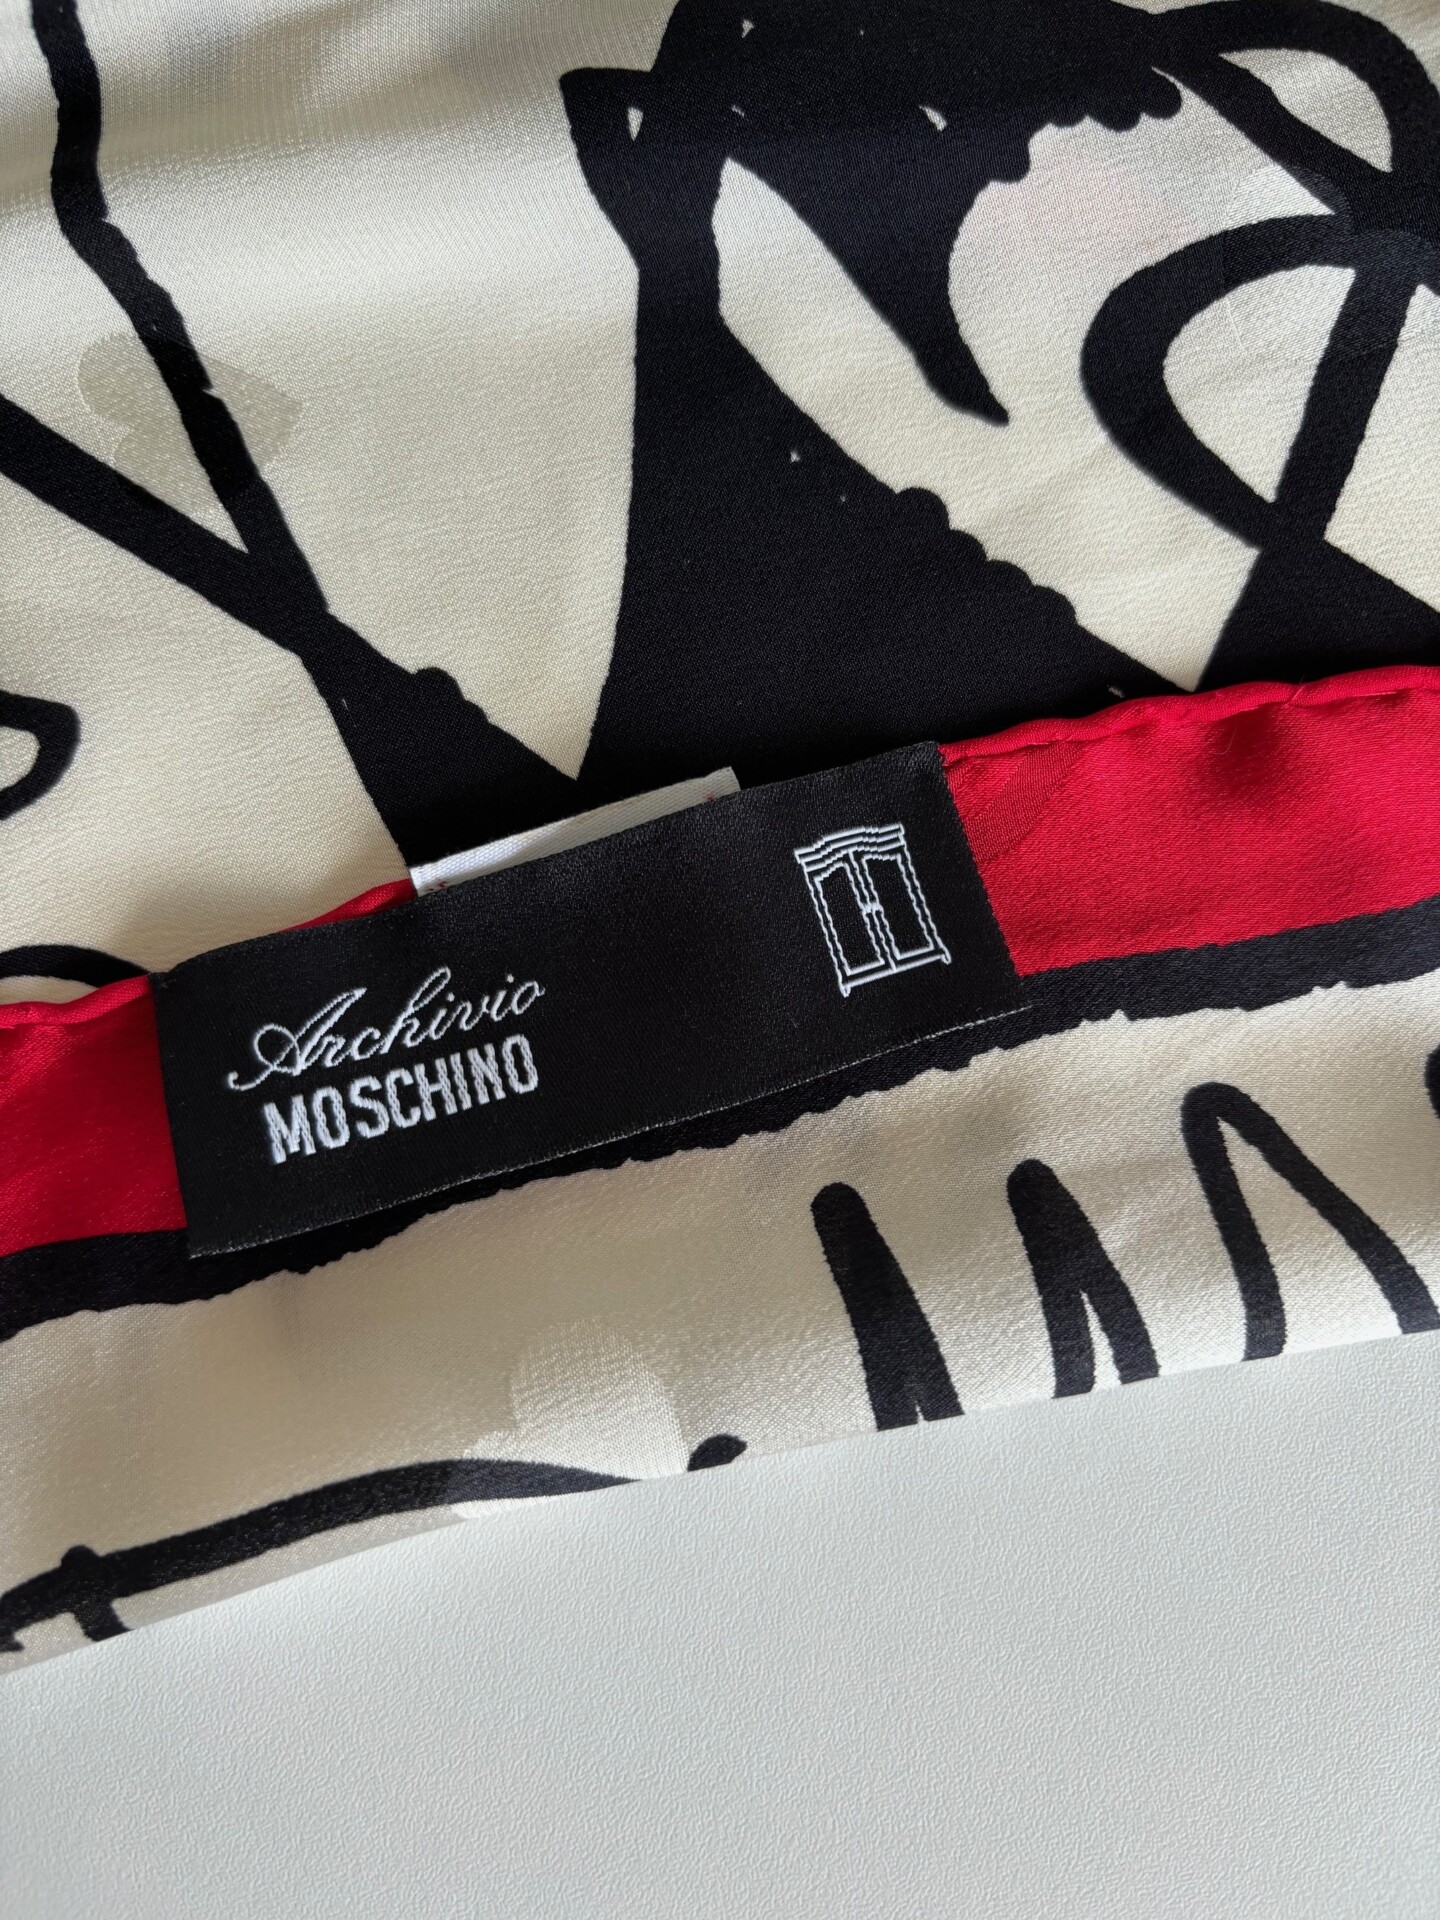 Moschino silk scarf ‘Amore’